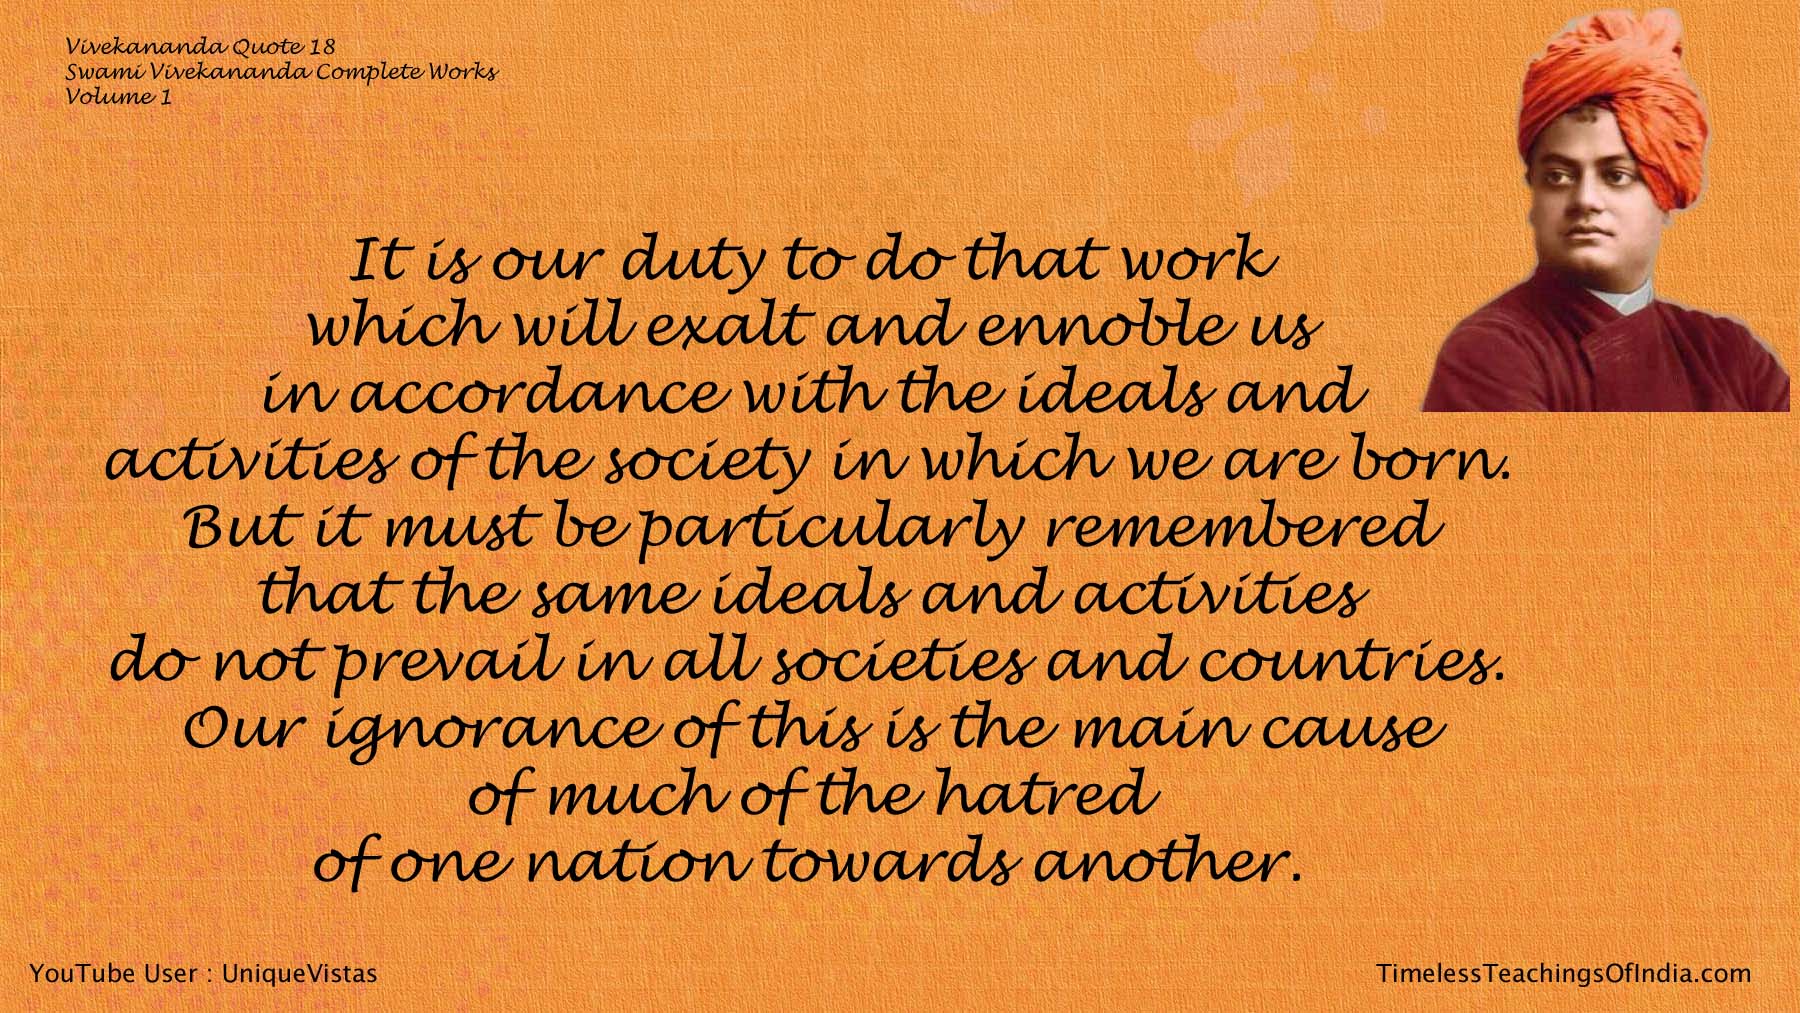 Vivekananda Quote 19